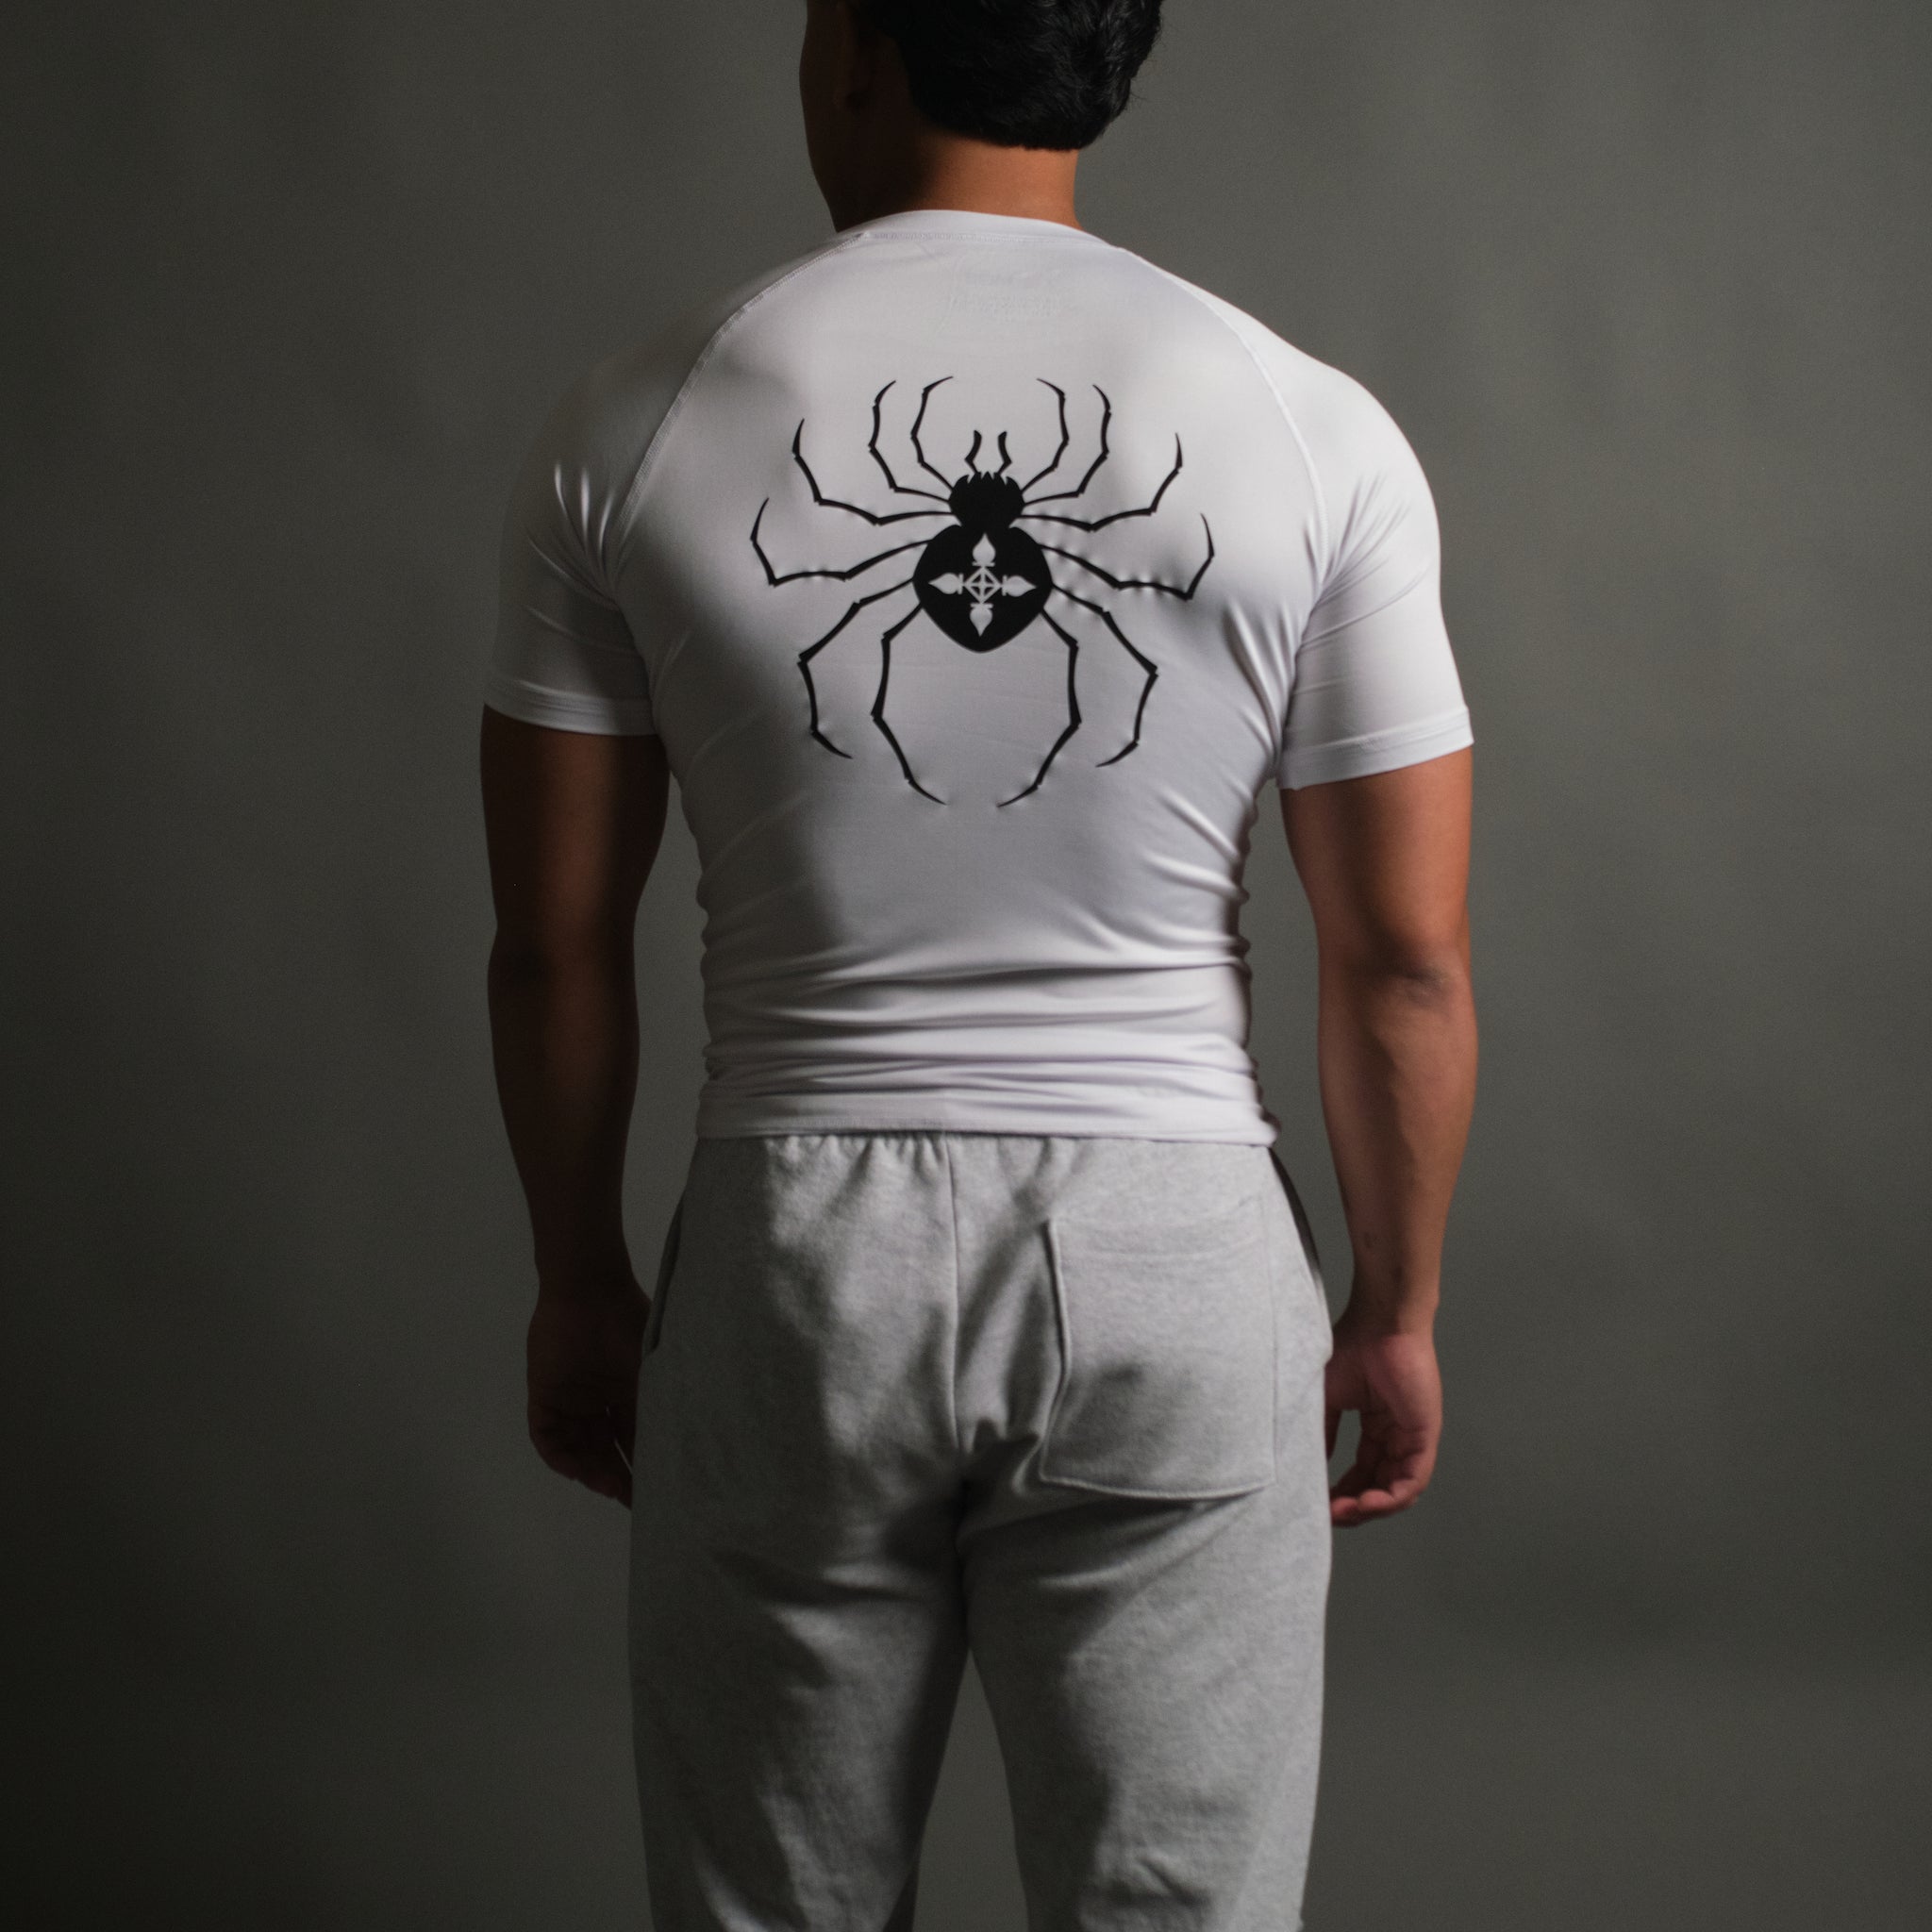 Chrollo Spider Compression Short Sleeve in White